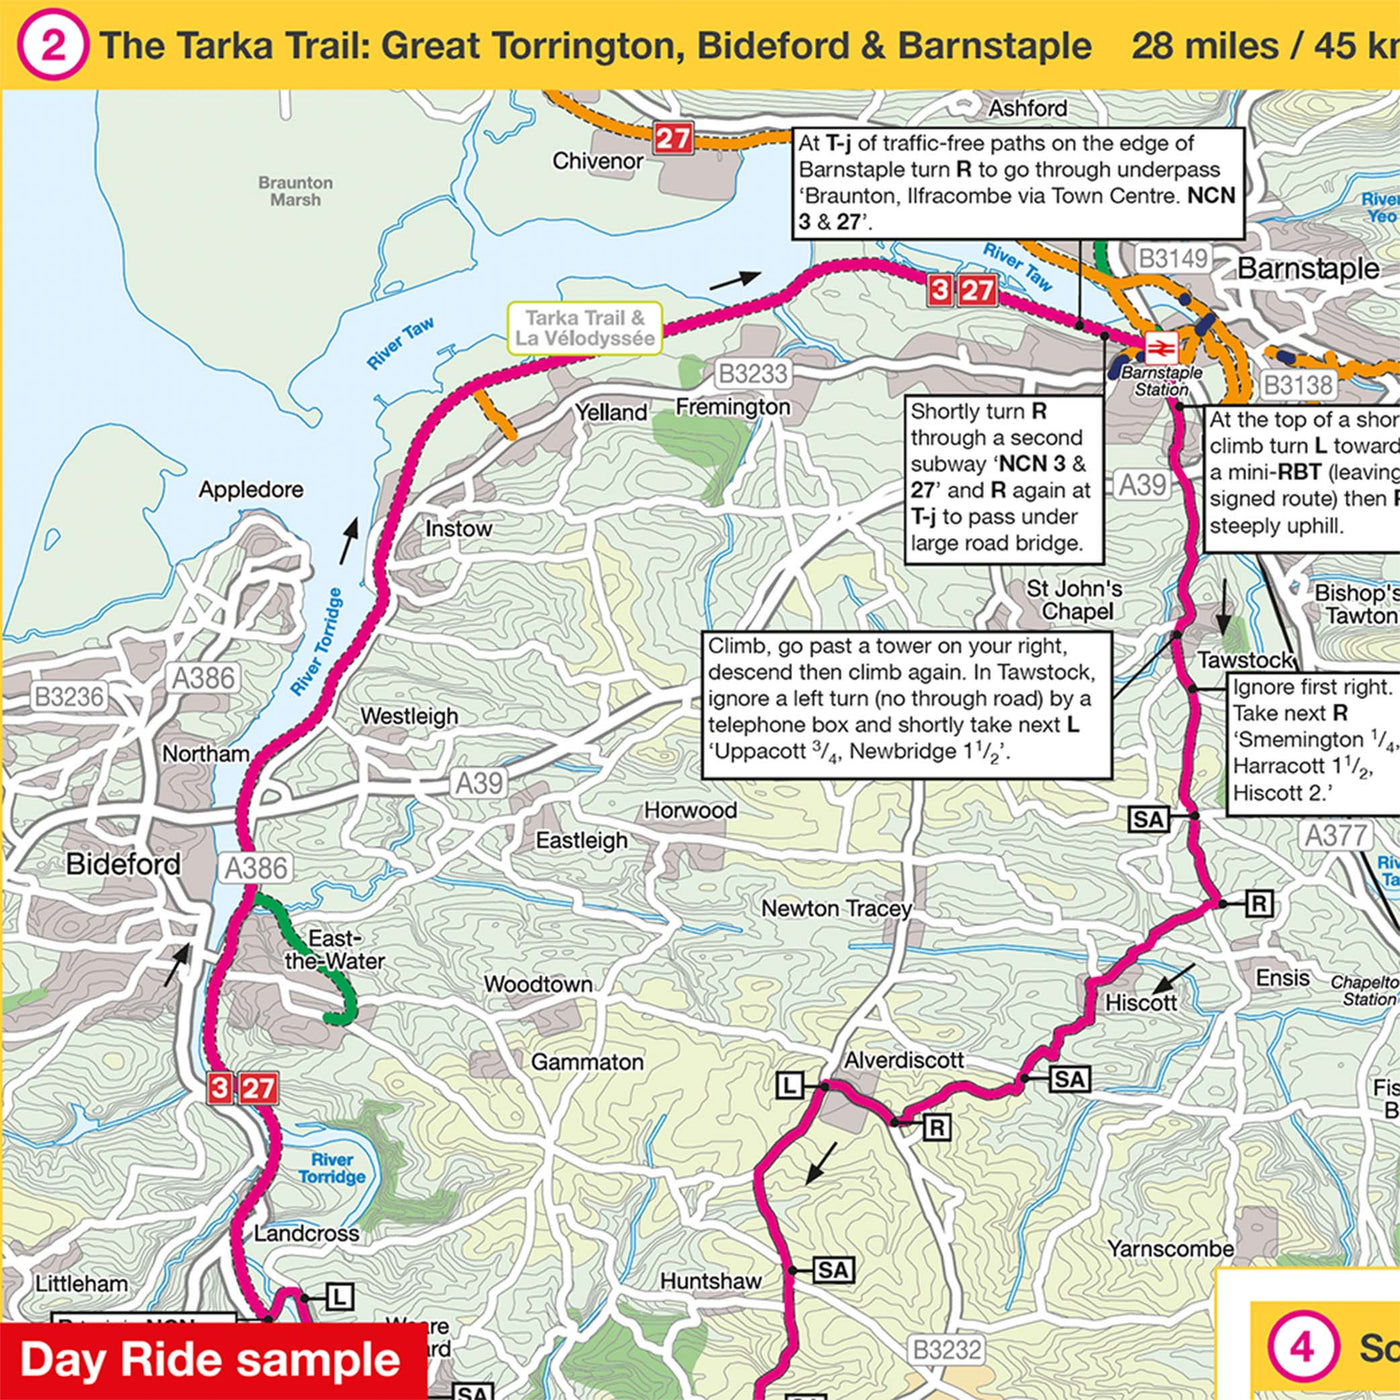 South Devon day ride sample: Tarka Trail. Featuring Great Torrington, Bideford and Barnstaple. 28 mile circular cycle route. 